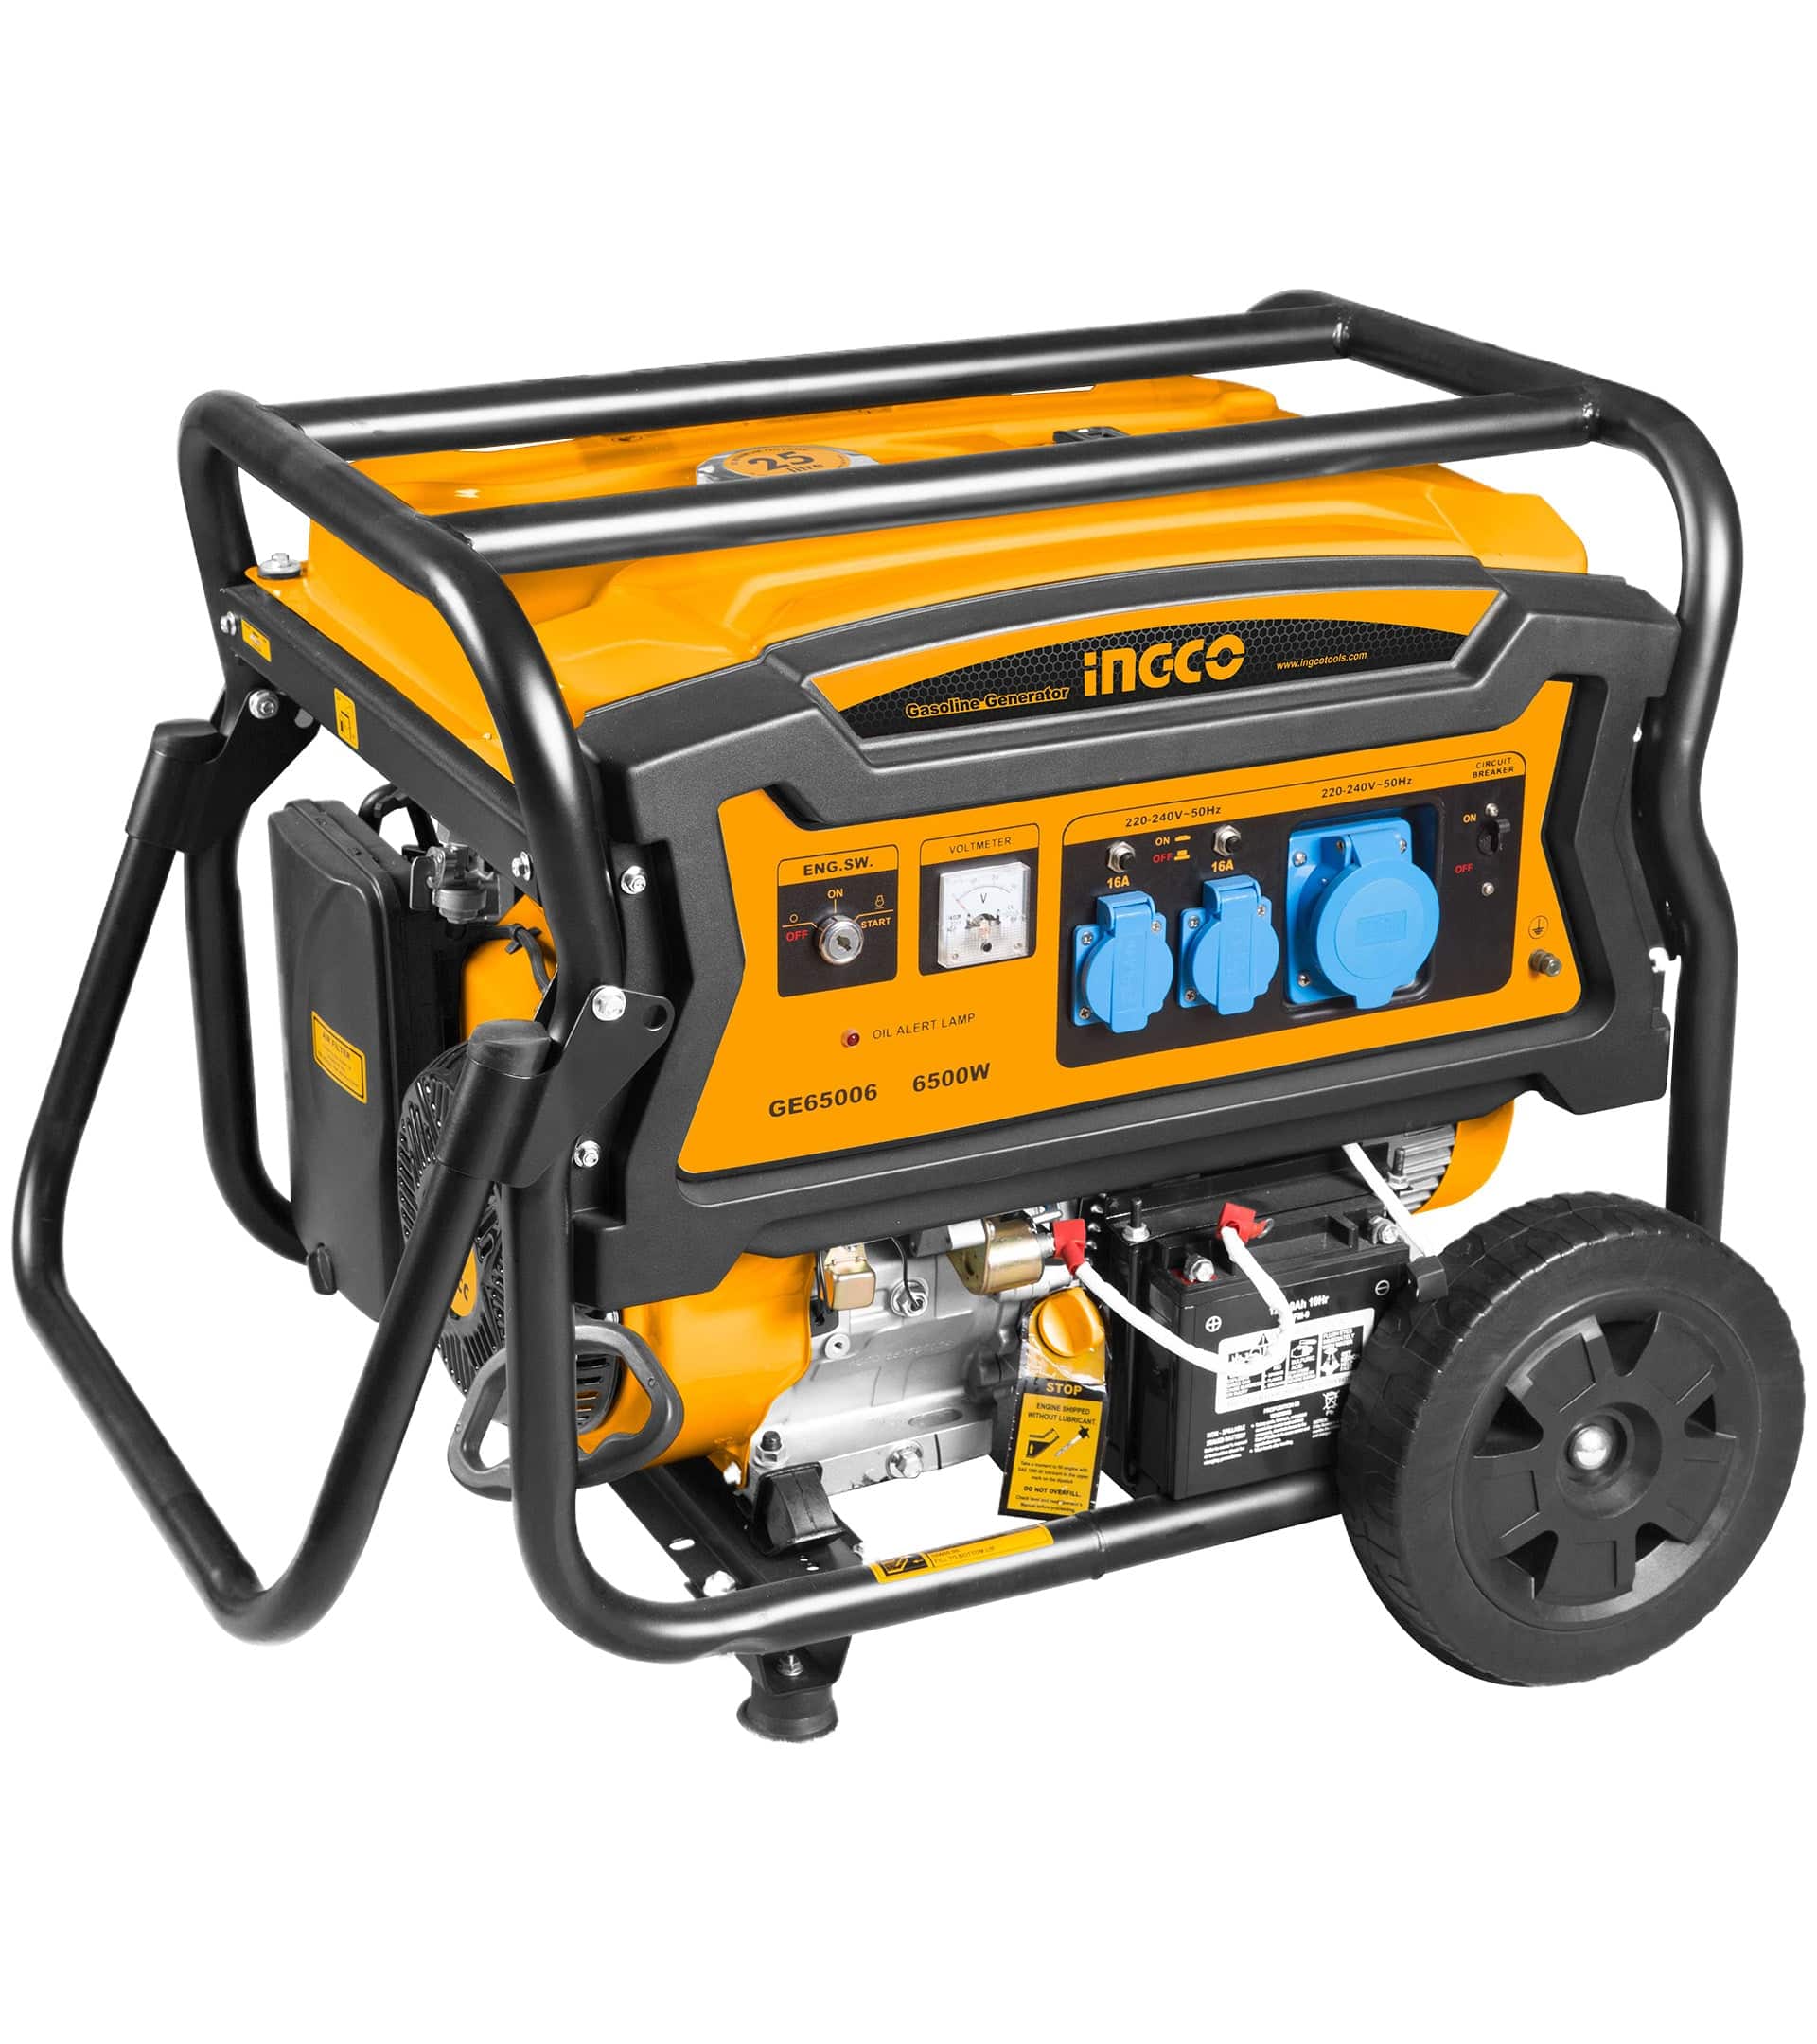 Ingco Gasoline Generator 7.5KW - GE75006 - Buy Online in Accra, Ghana at Supply Master Generator Buy Tools hardware Building materials